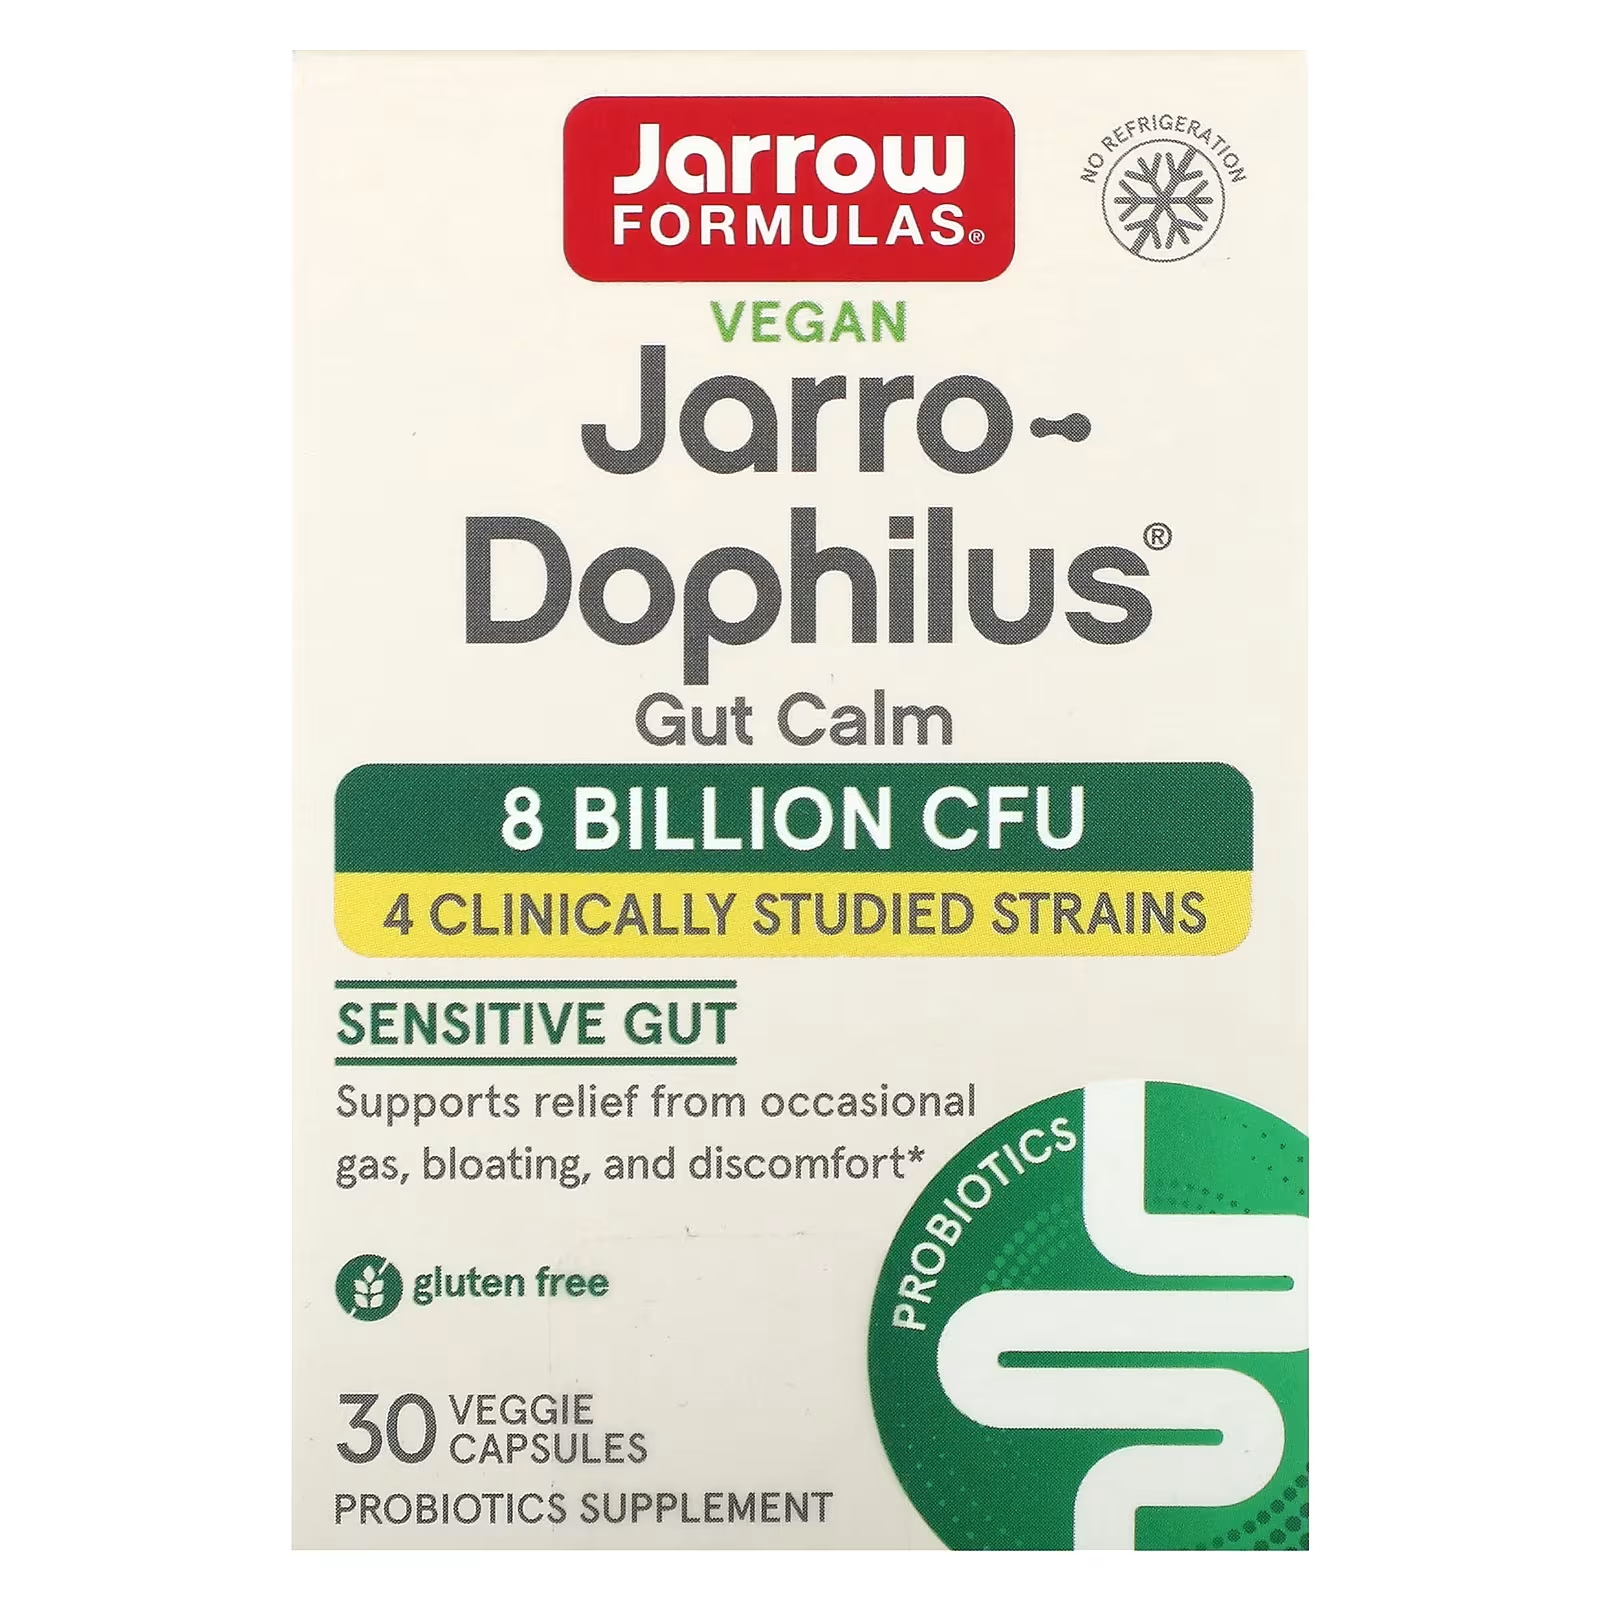 Jarrow Formulas Jarro-Dophilus Gut Calm 8 миллиардов КОЕ, 30 растительных капсул now foods сахаромицеты буларди 60